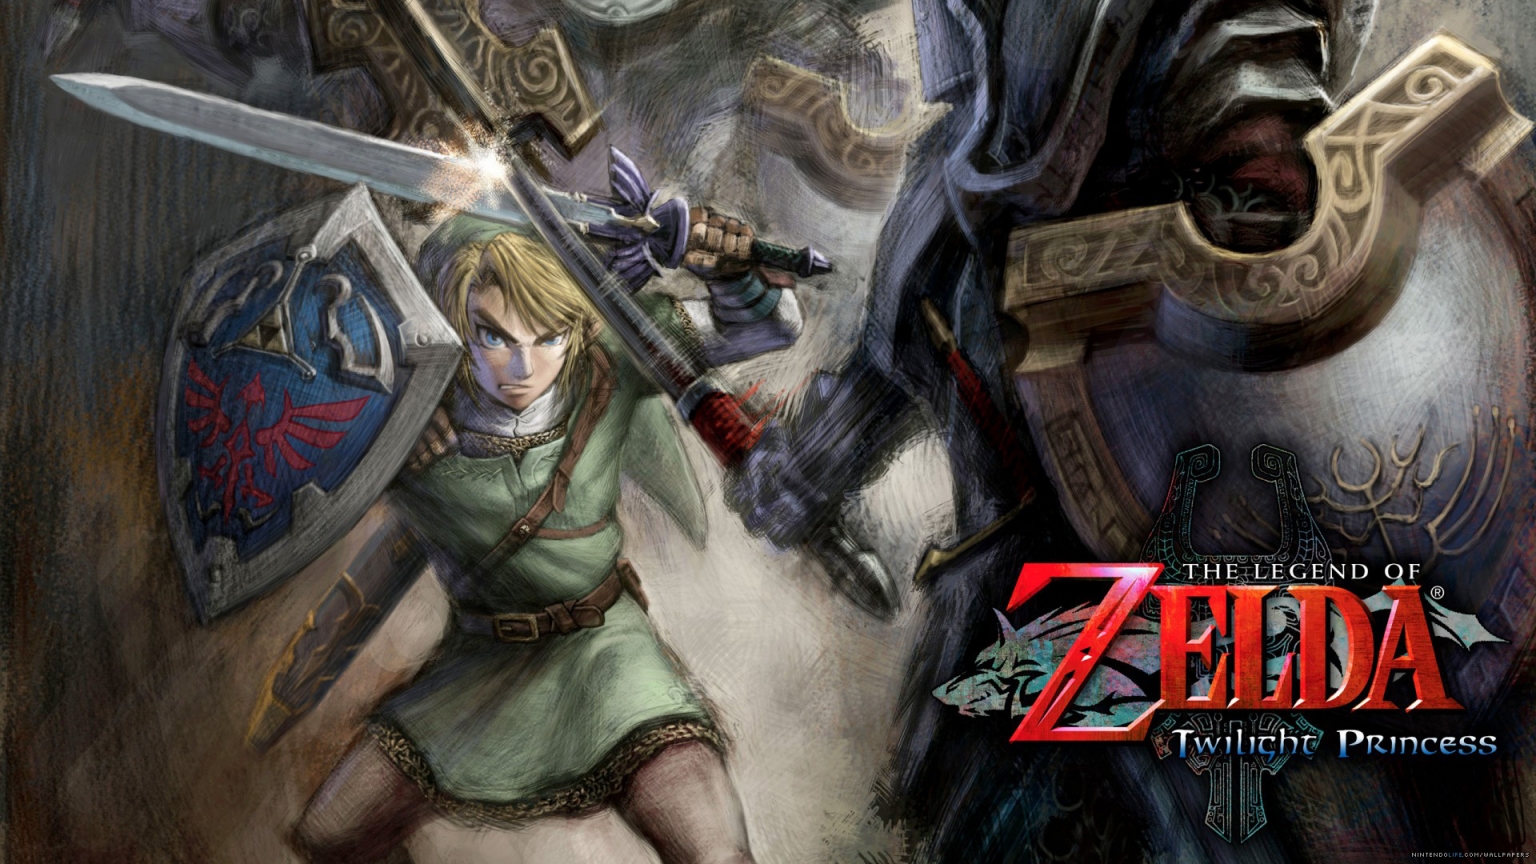 The Legend of Zelda Twilight Princess for 1536 x 864 HDTV resolution